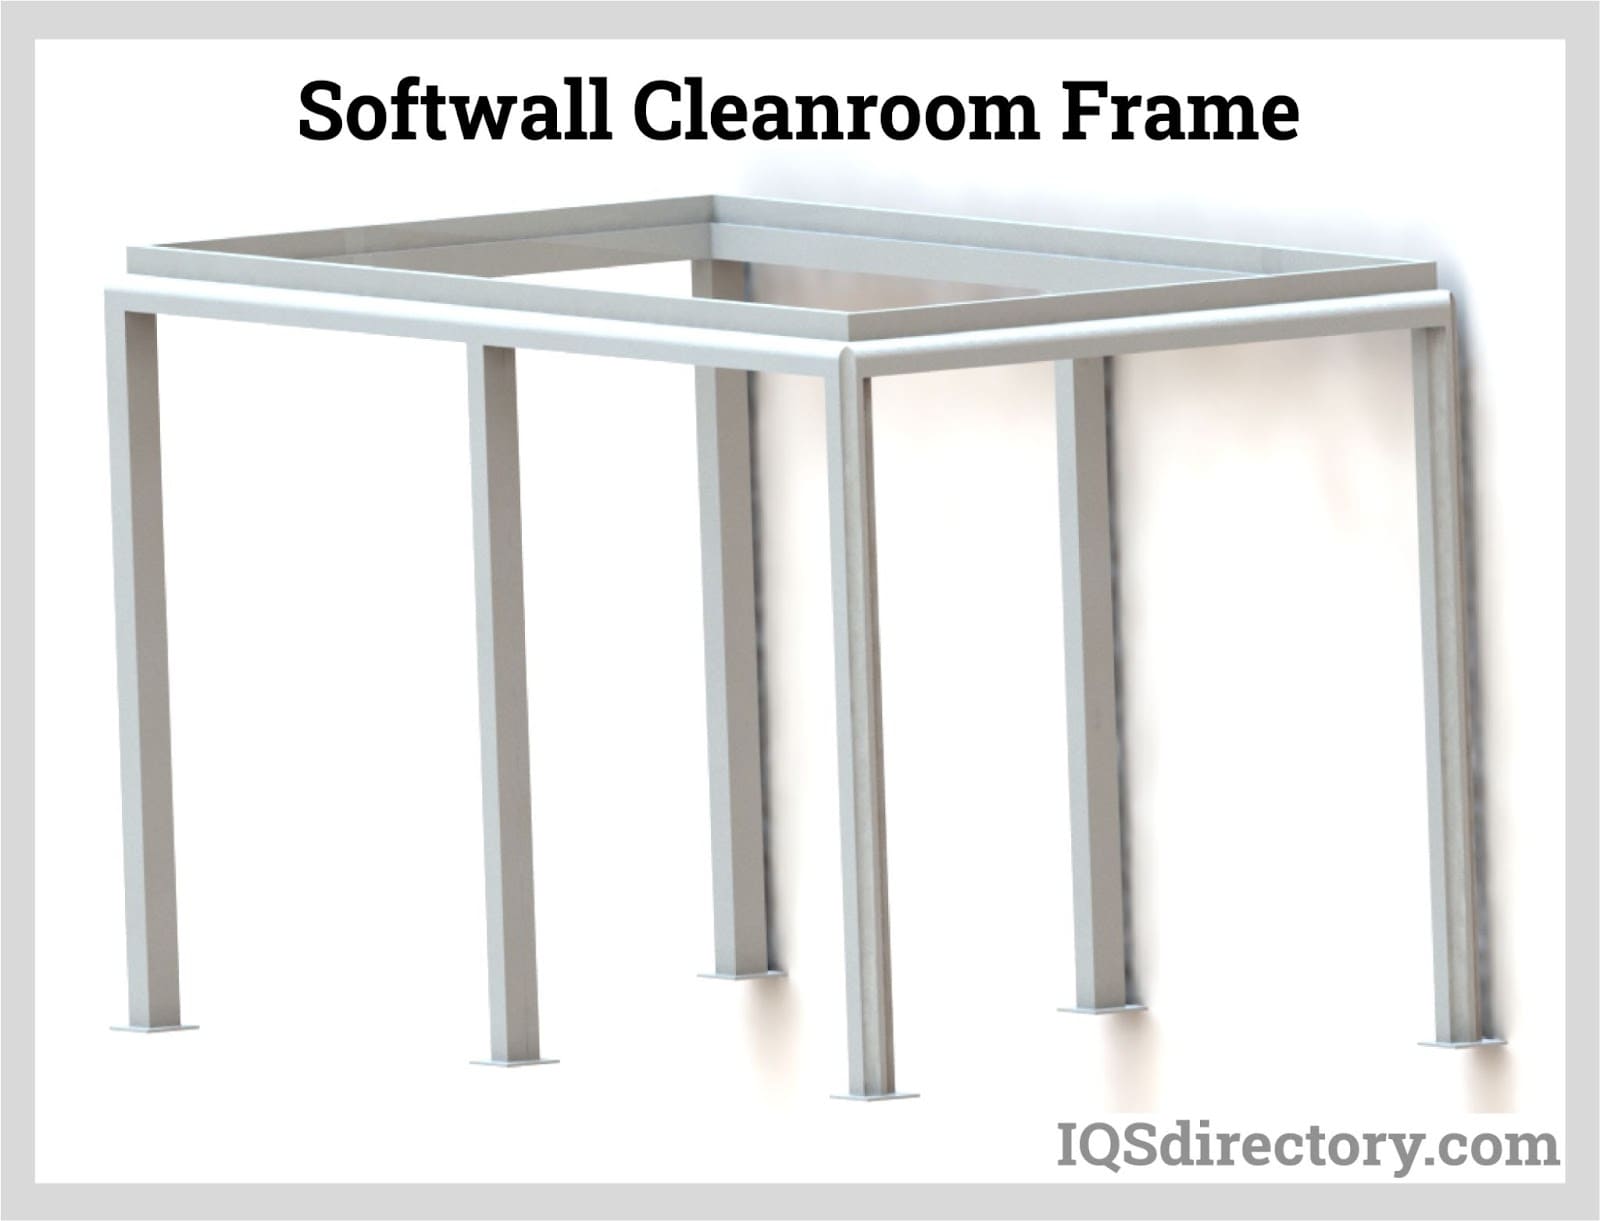 Softwall Cleanroom Frame